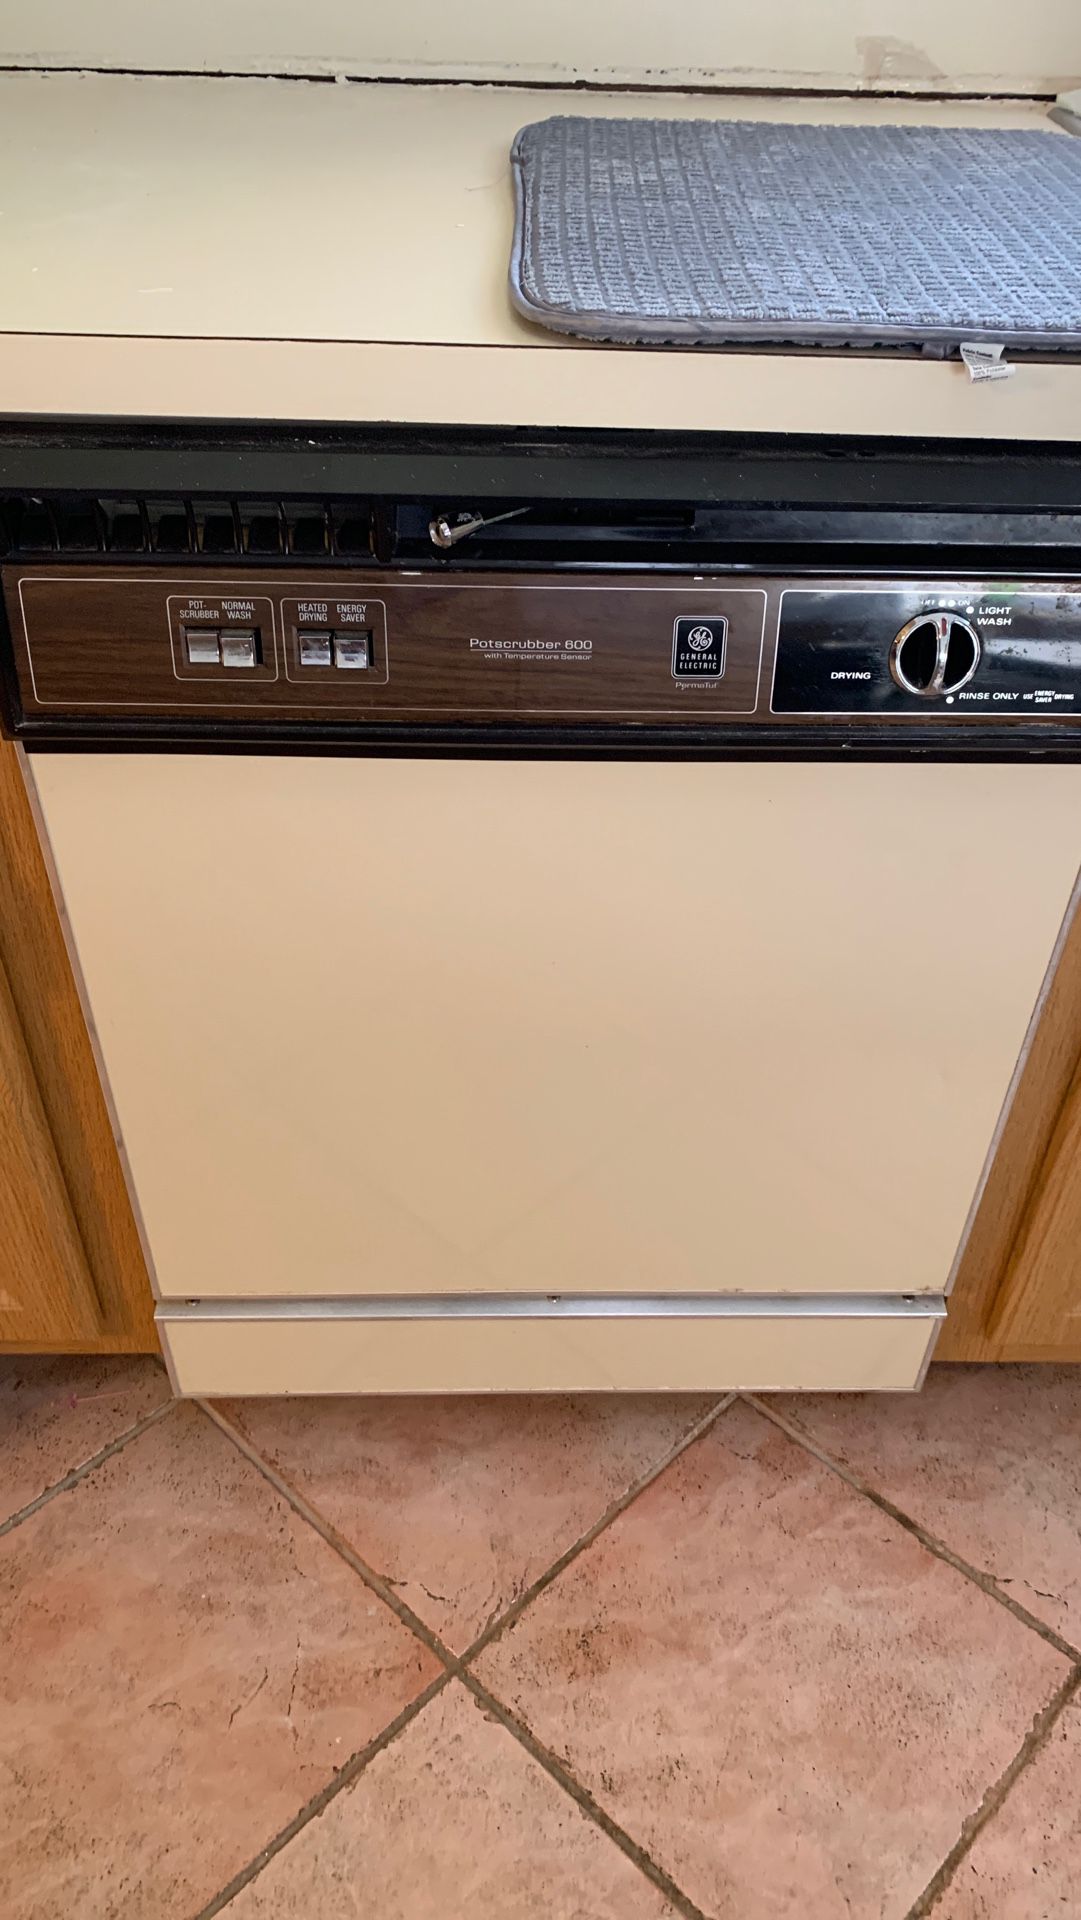 GE potscrubber dishwasher 600, works great!